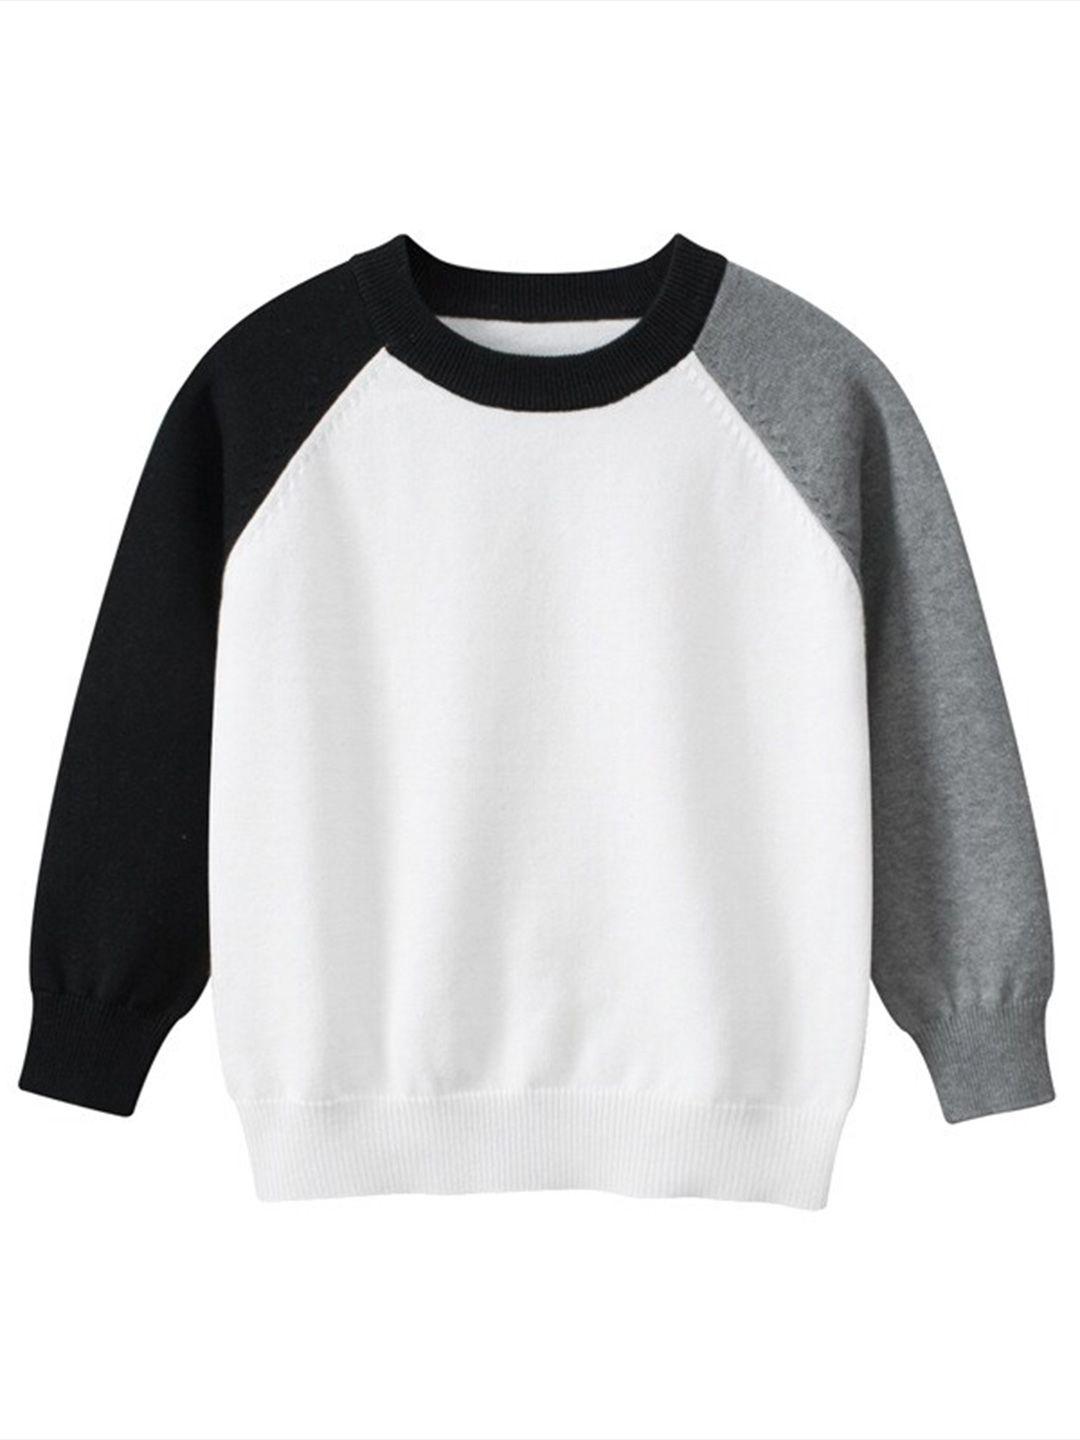 stylecast boys white & black colourblocked cotton pullover sweater